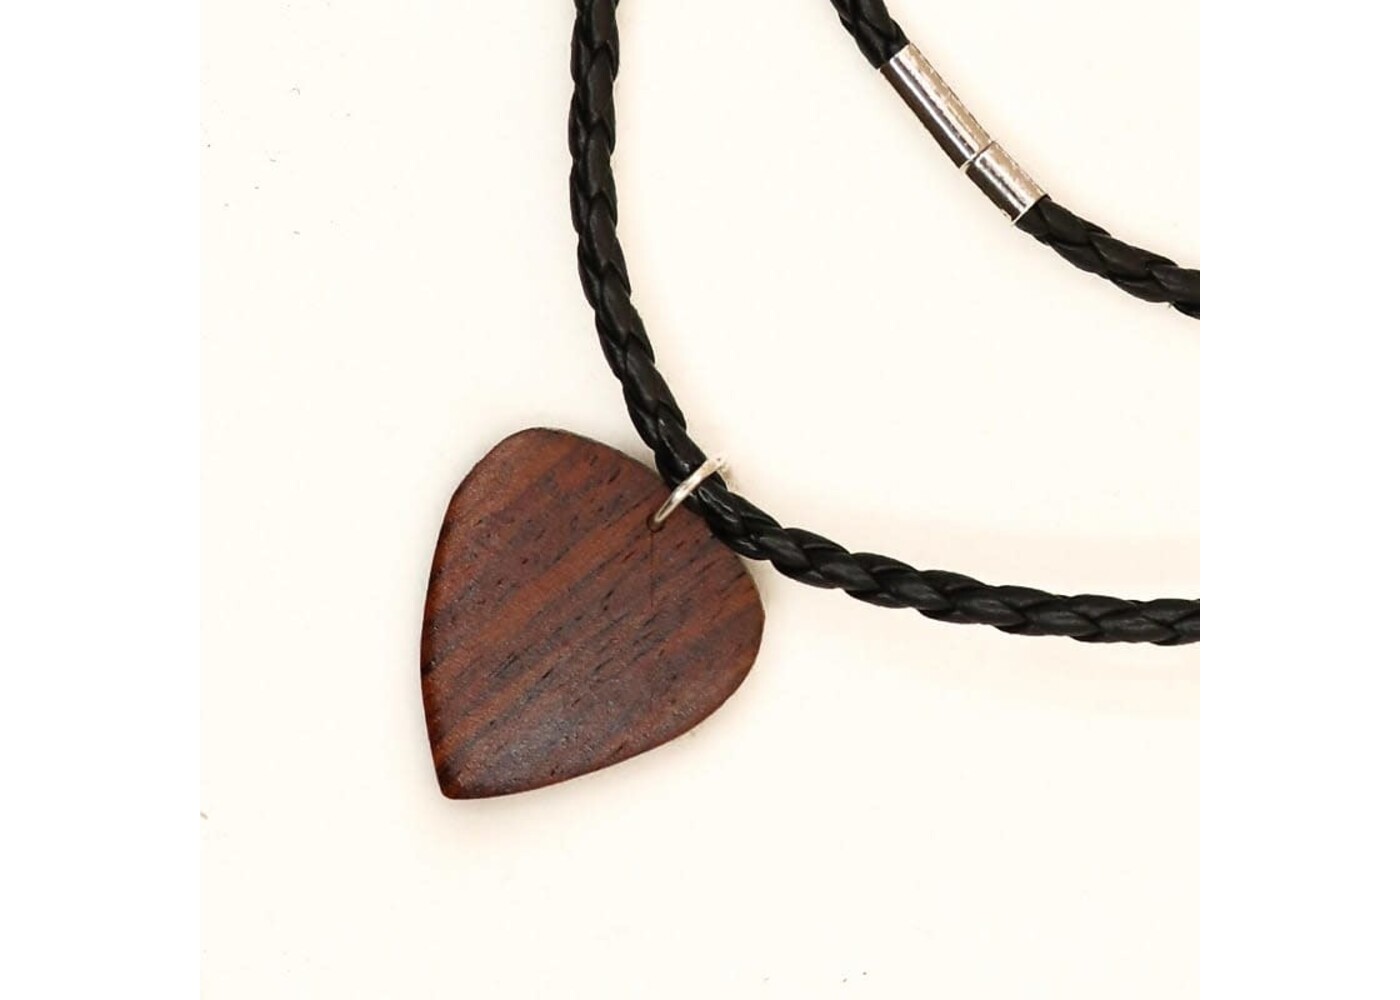 Steven Ashley Steven  Ashley Handmade Wood Guitar Pick Necklace